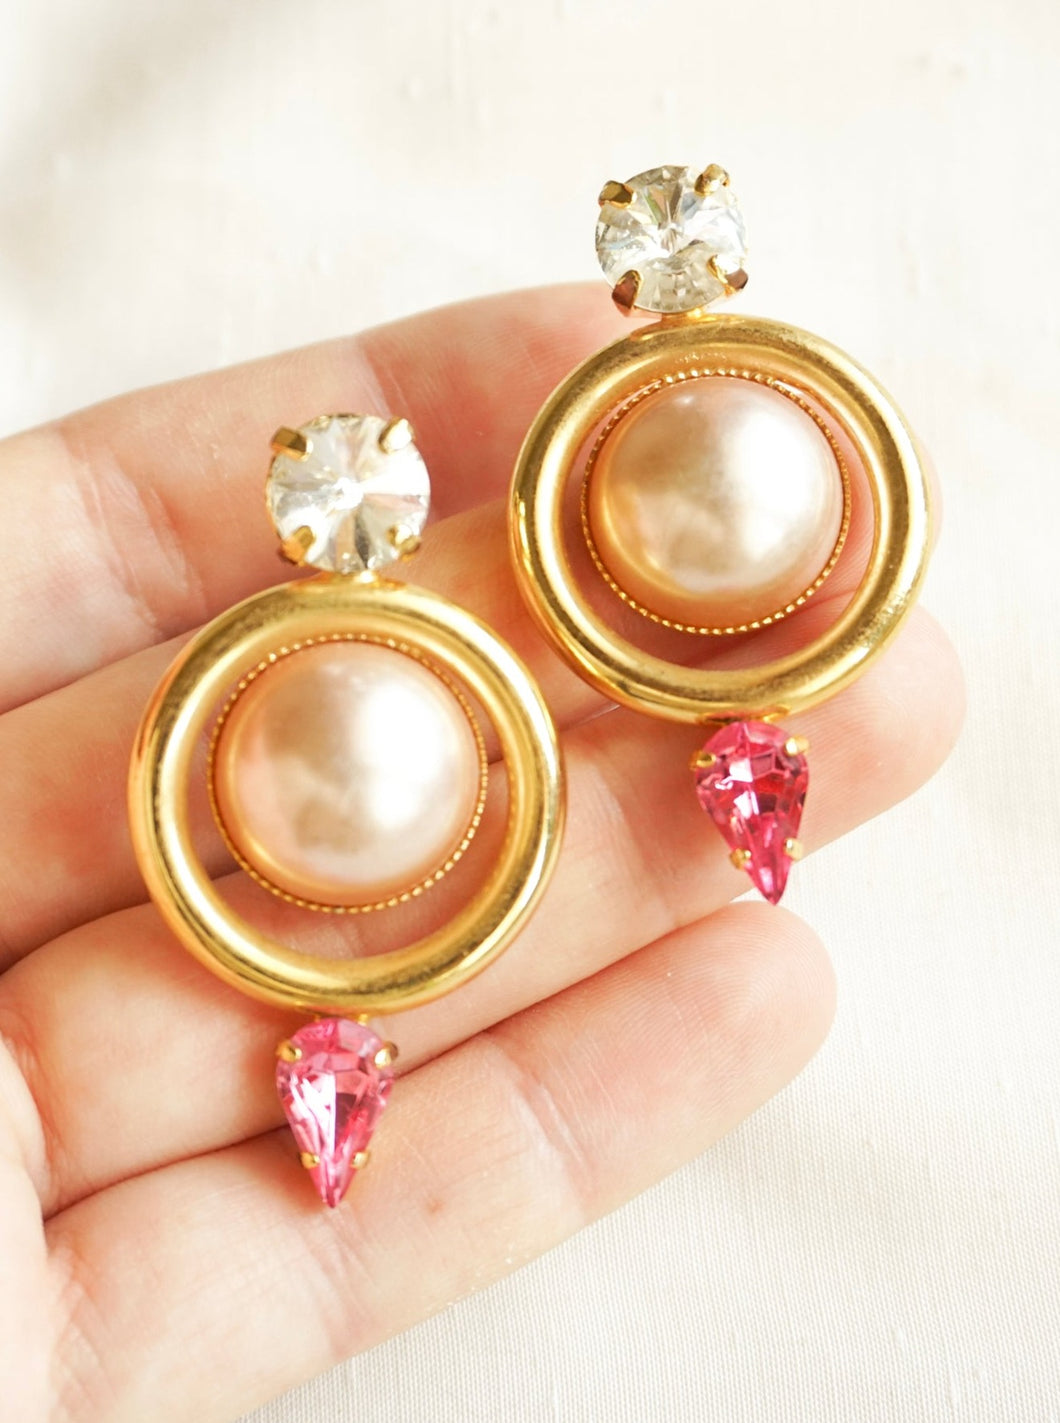 Baroque earrings with pink rhinestones